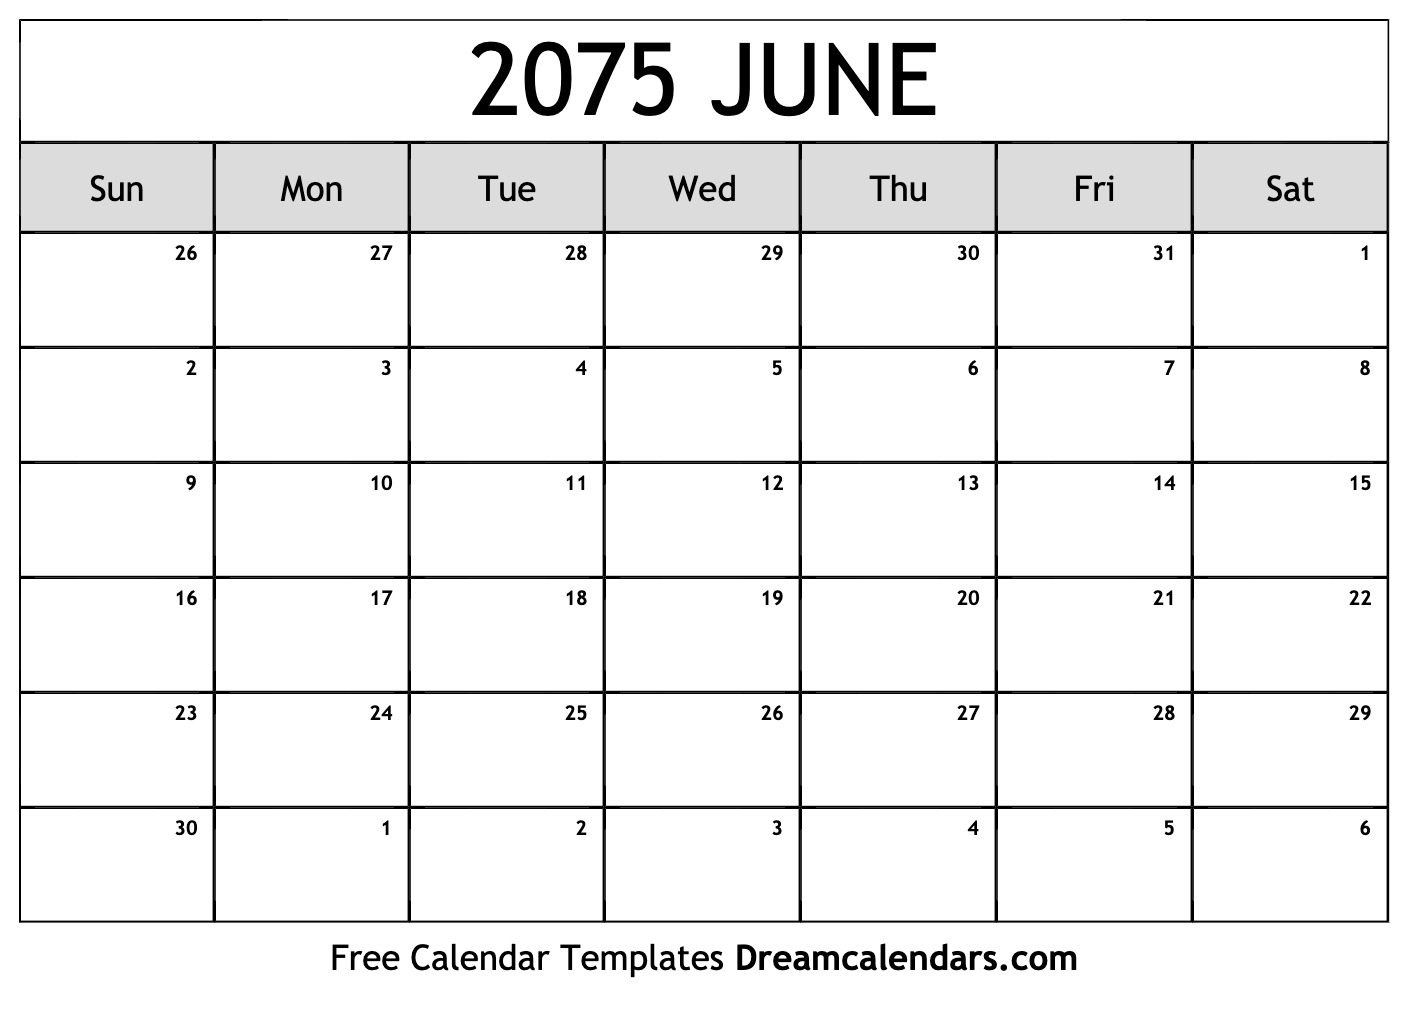 june-2075-calendar-free-blank-printable-with-holidays